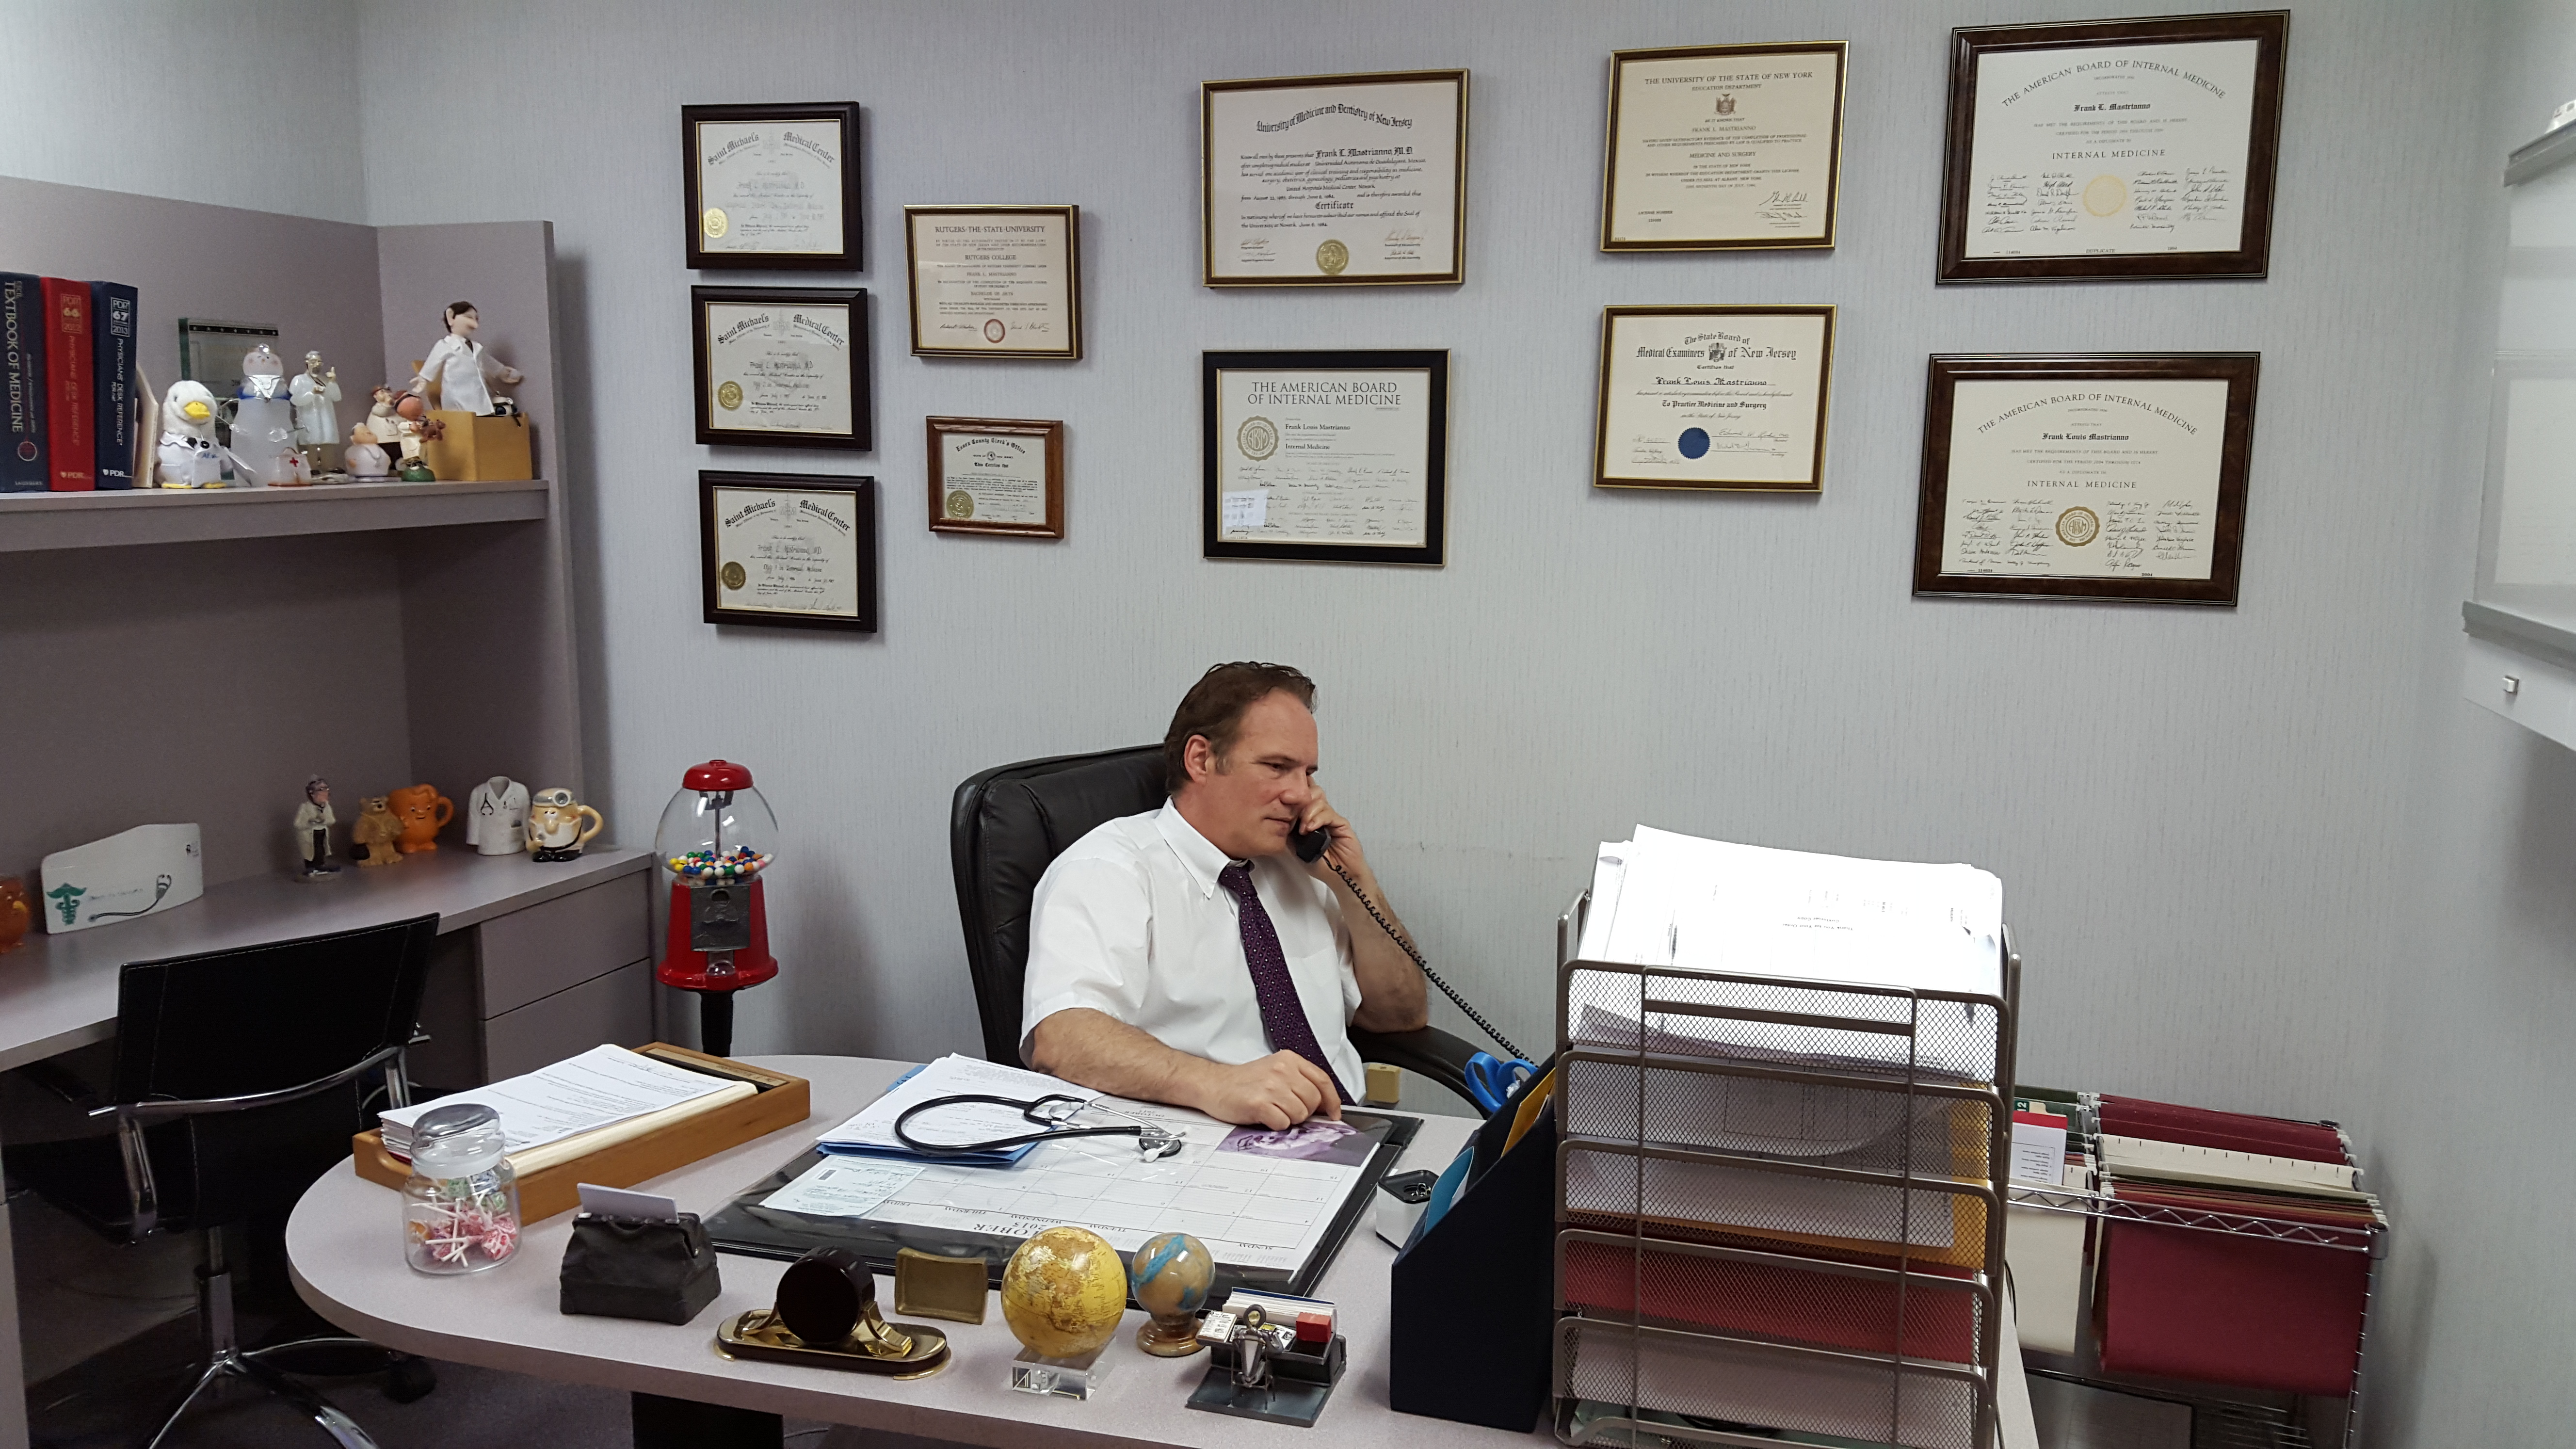 Dr Mastrianno at his desk